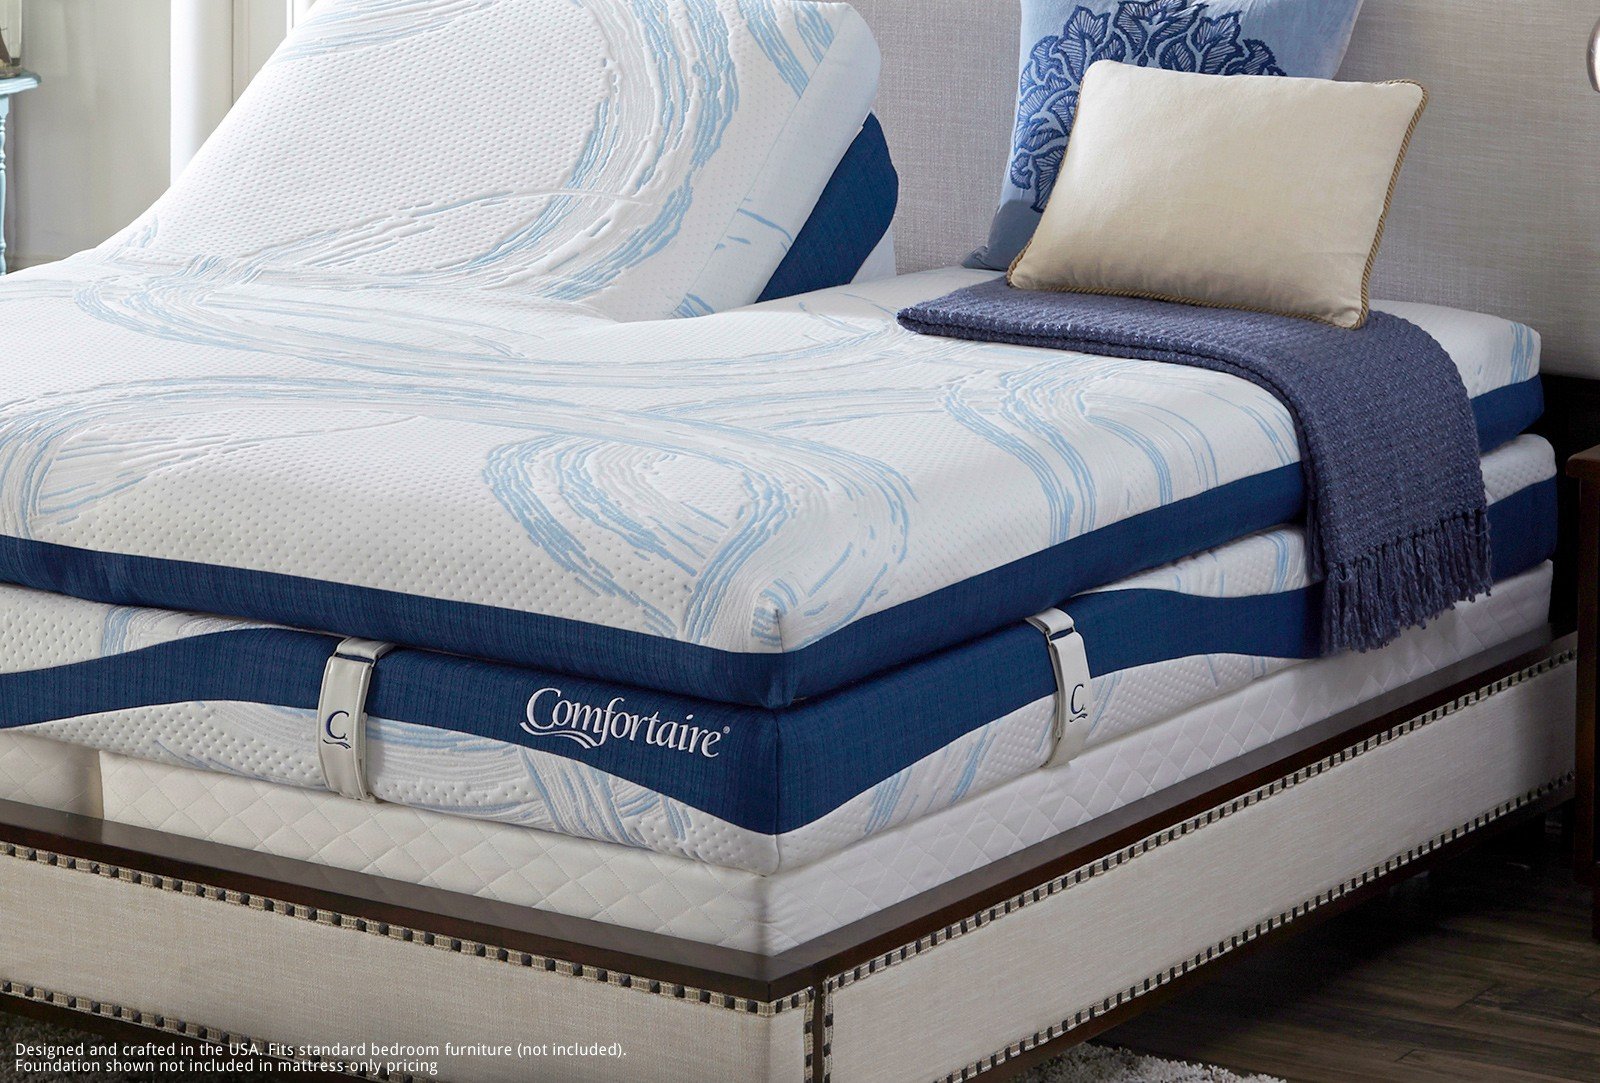 U15 Solstice Split Top Air Bed by Comfortaire